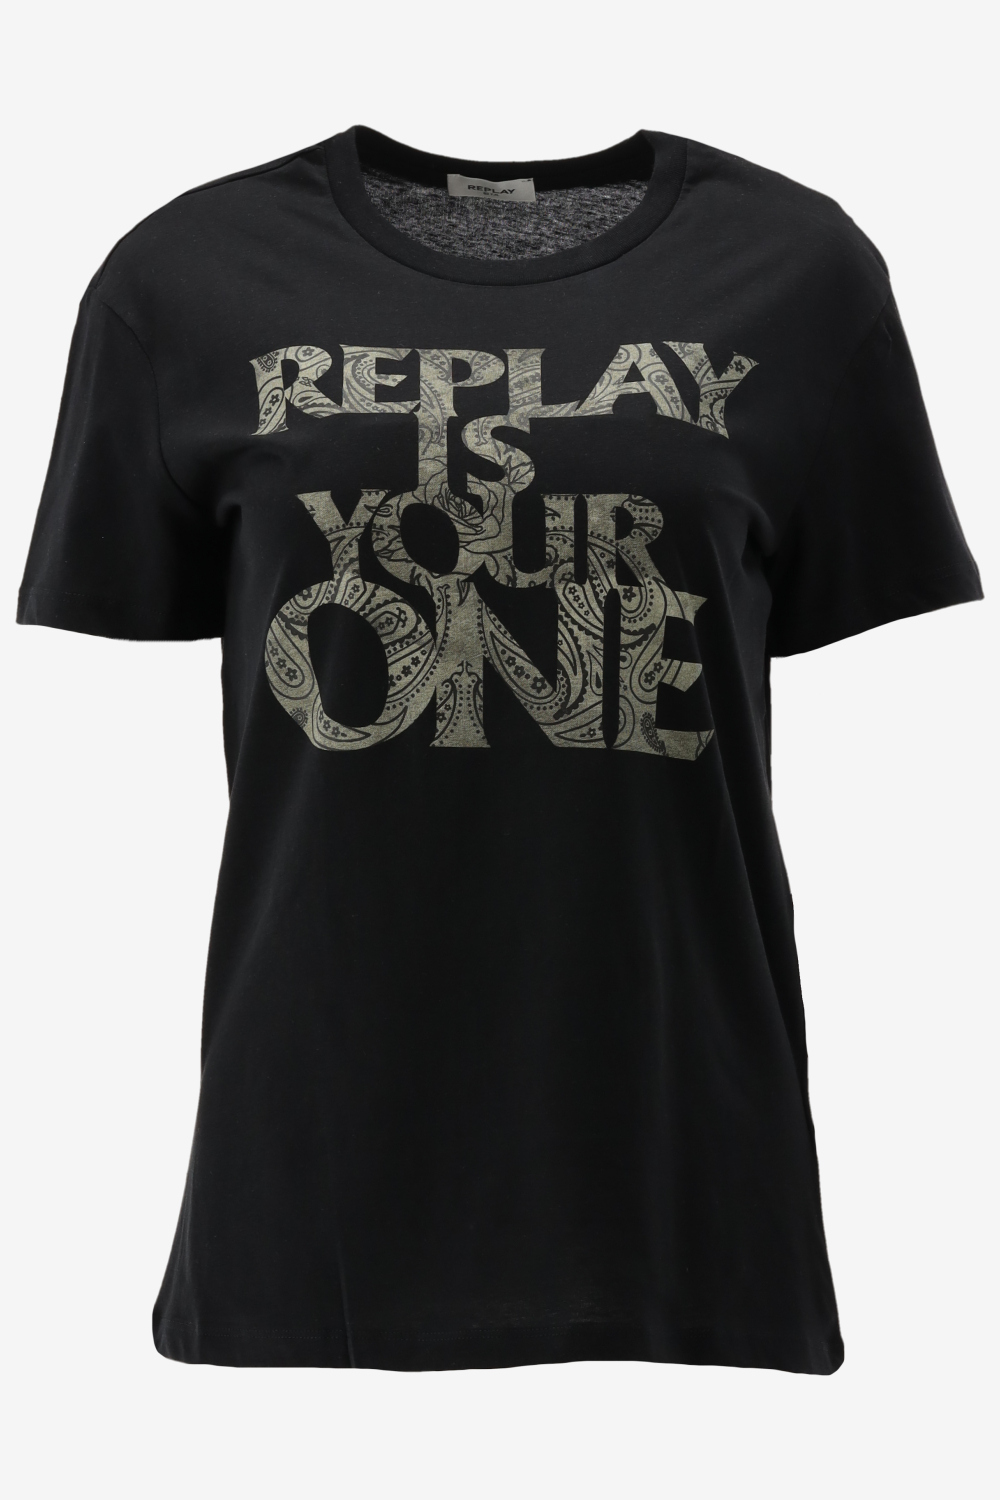 Replay T shirt